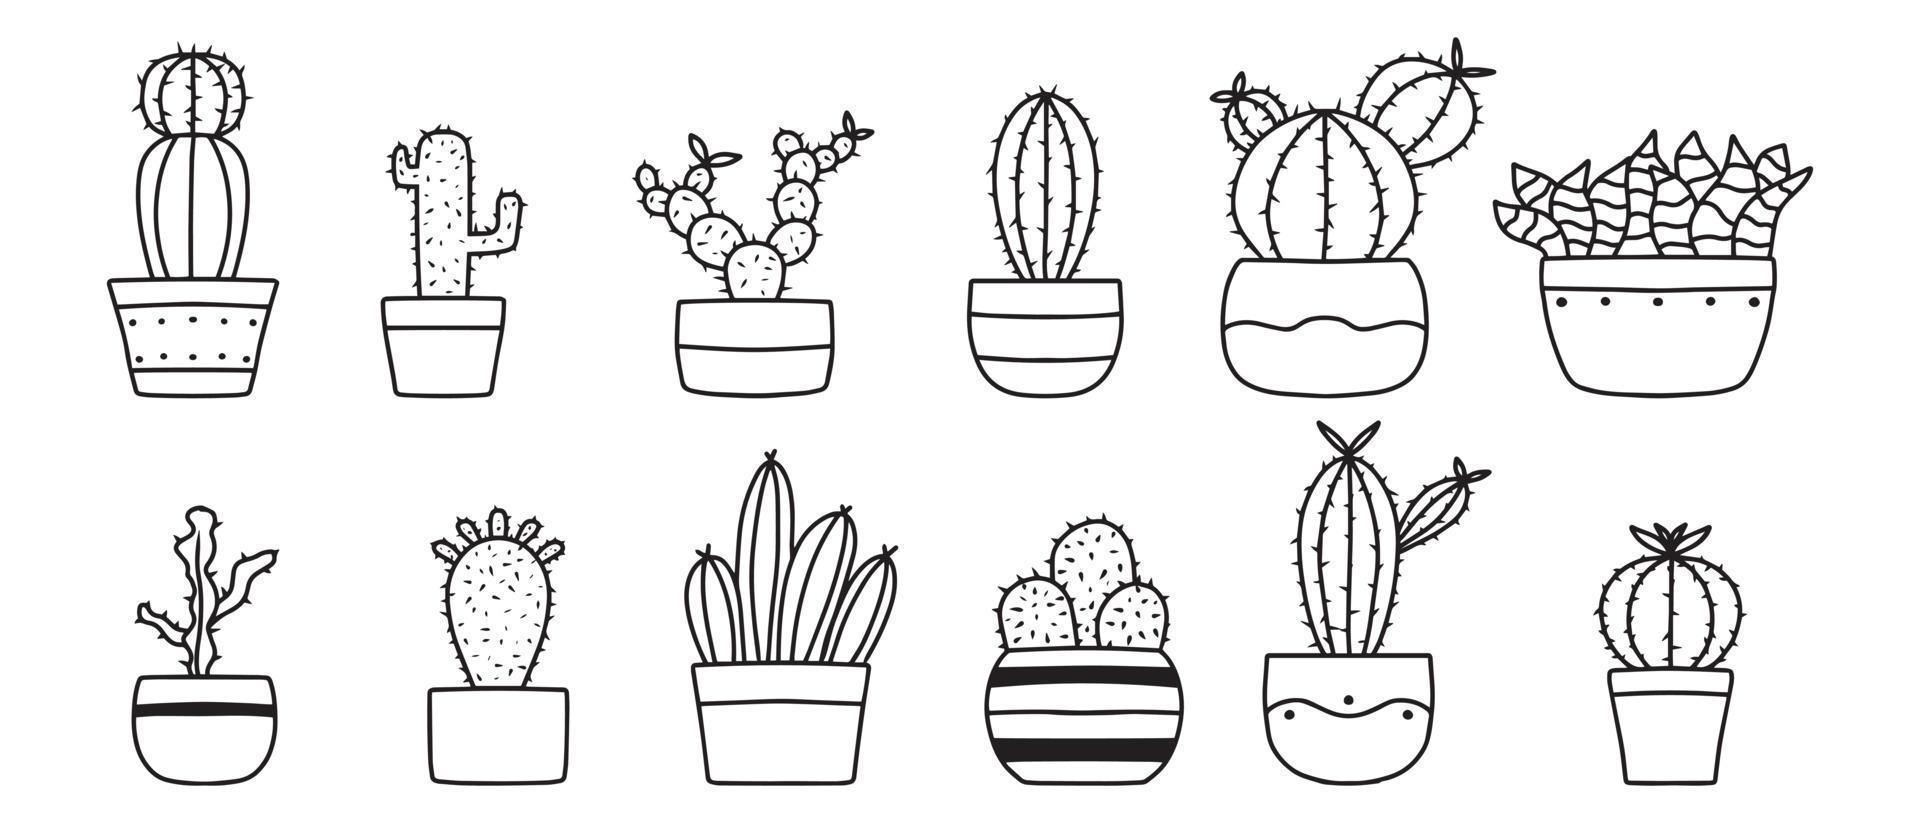 Doodle Cactus Set. Cacti in Pots. Vector illustration